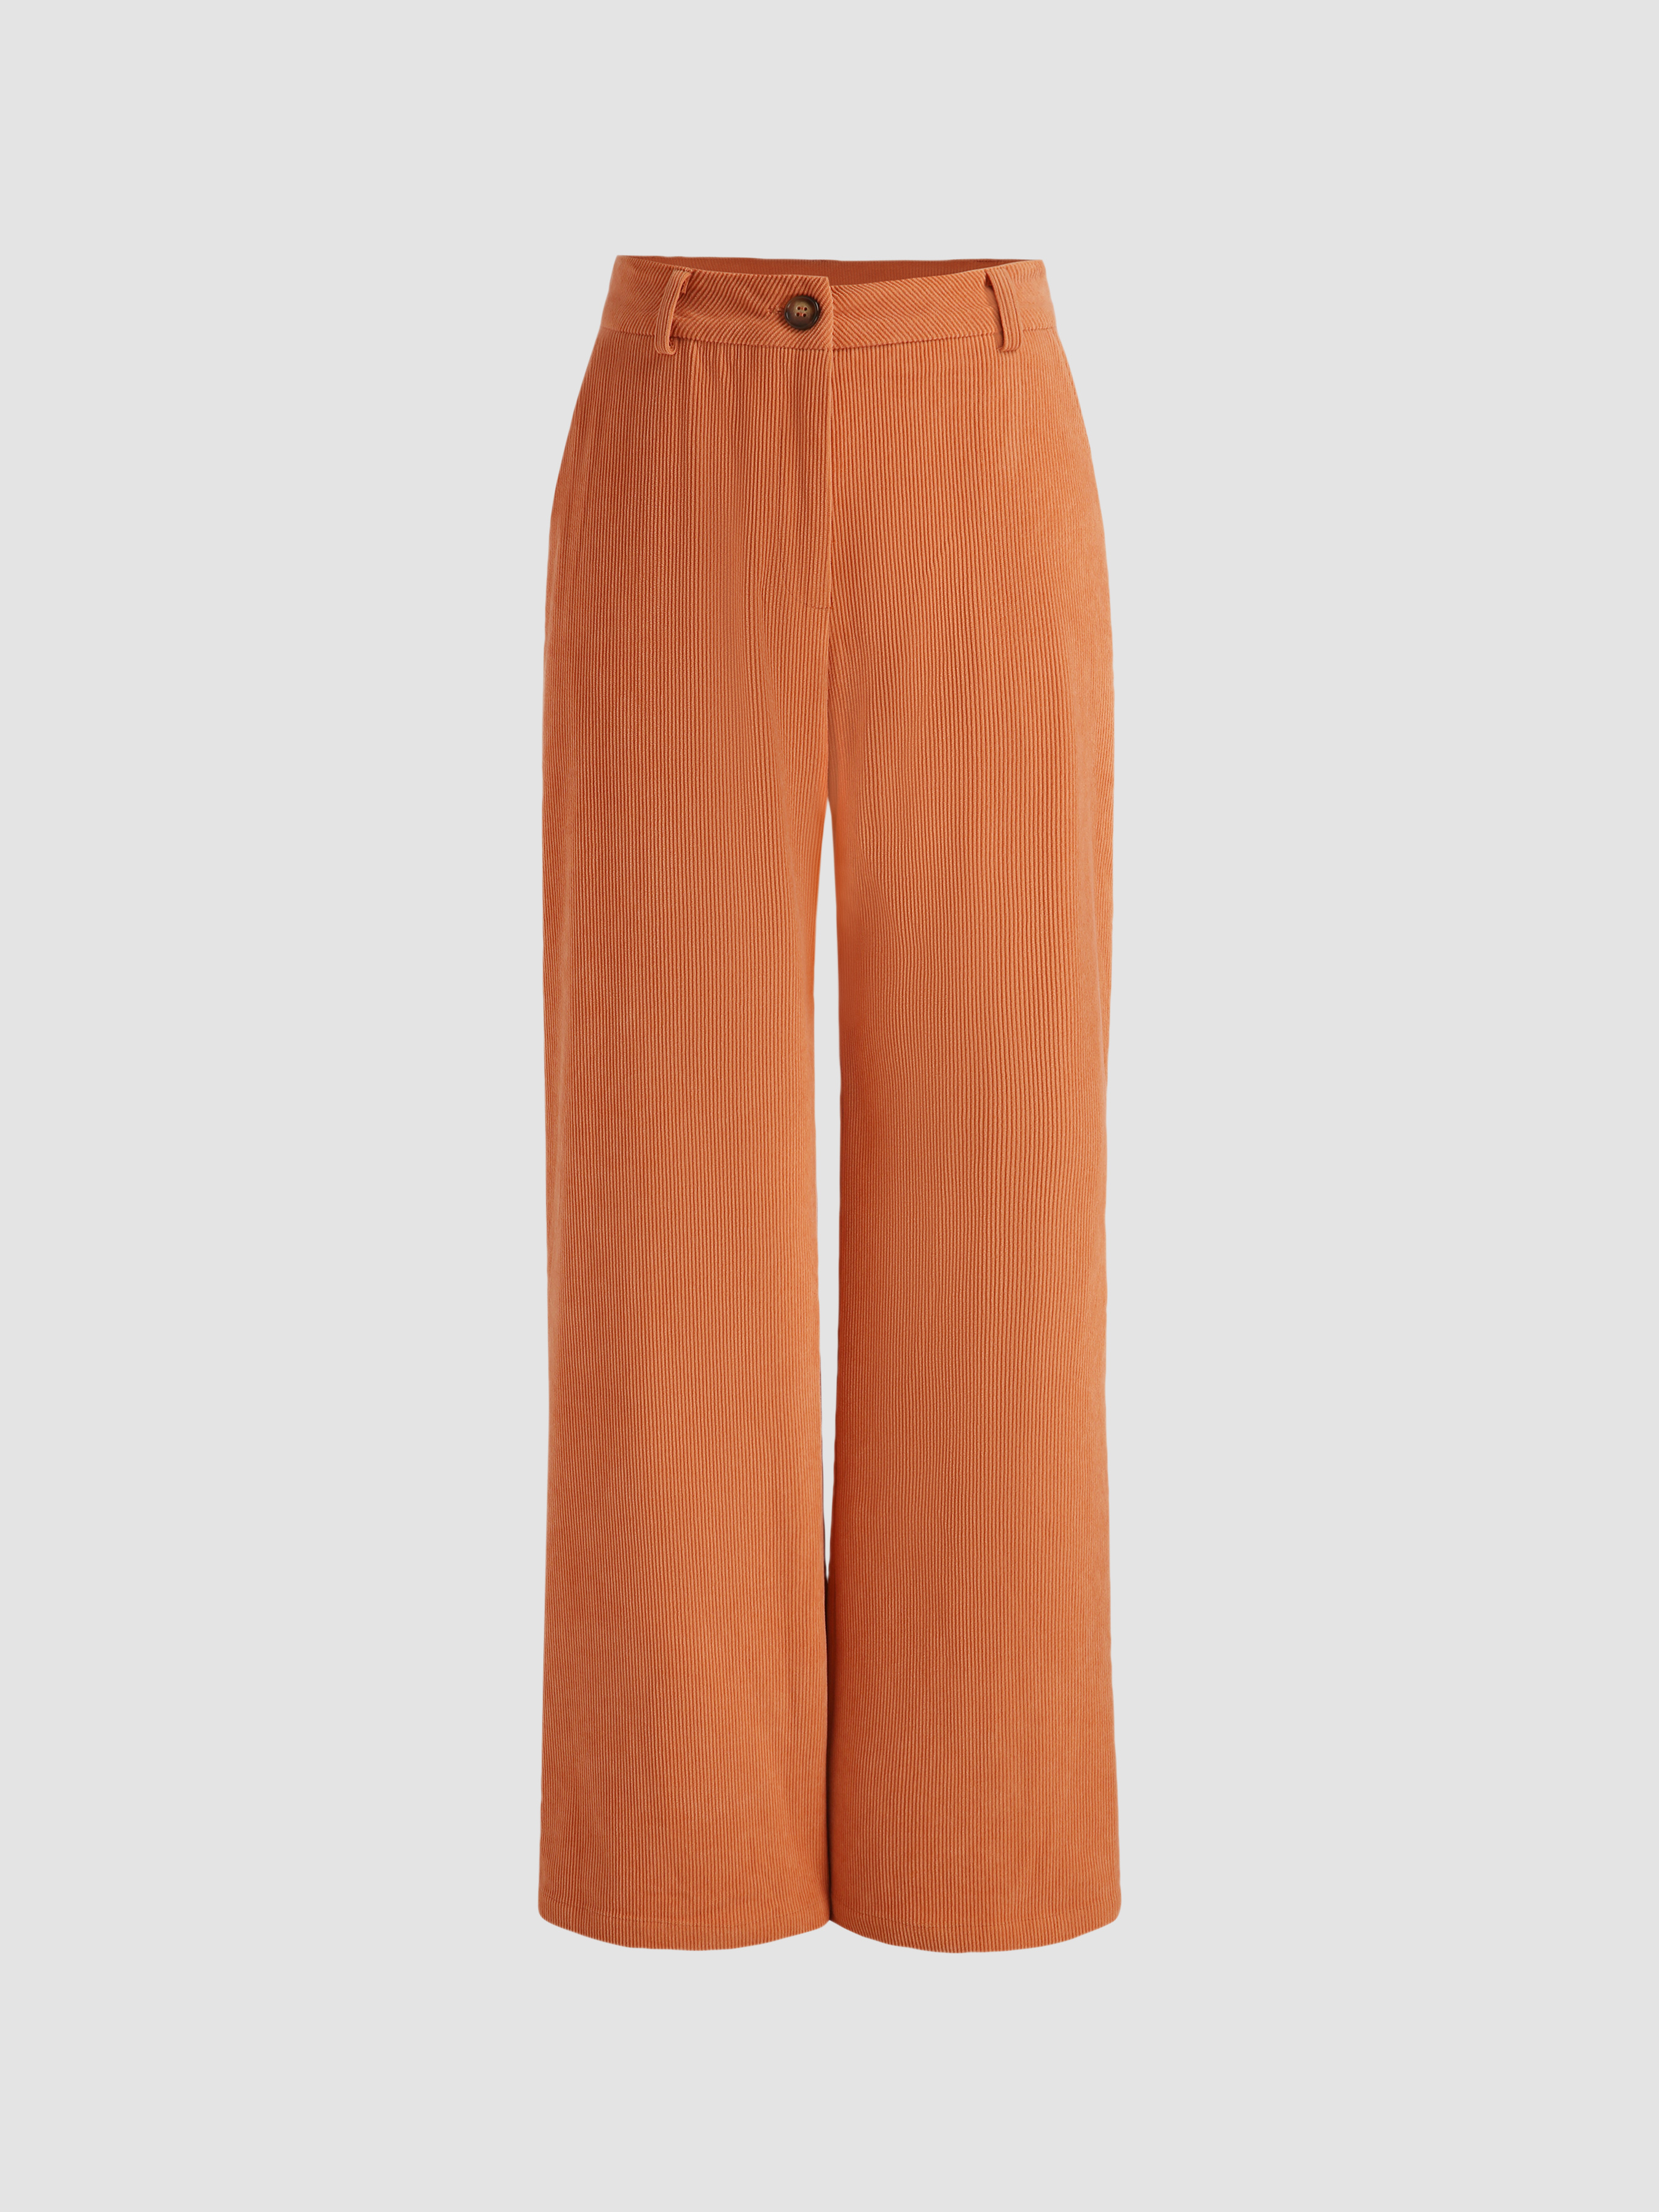 Orange Corduroy Straight Pants - Cider